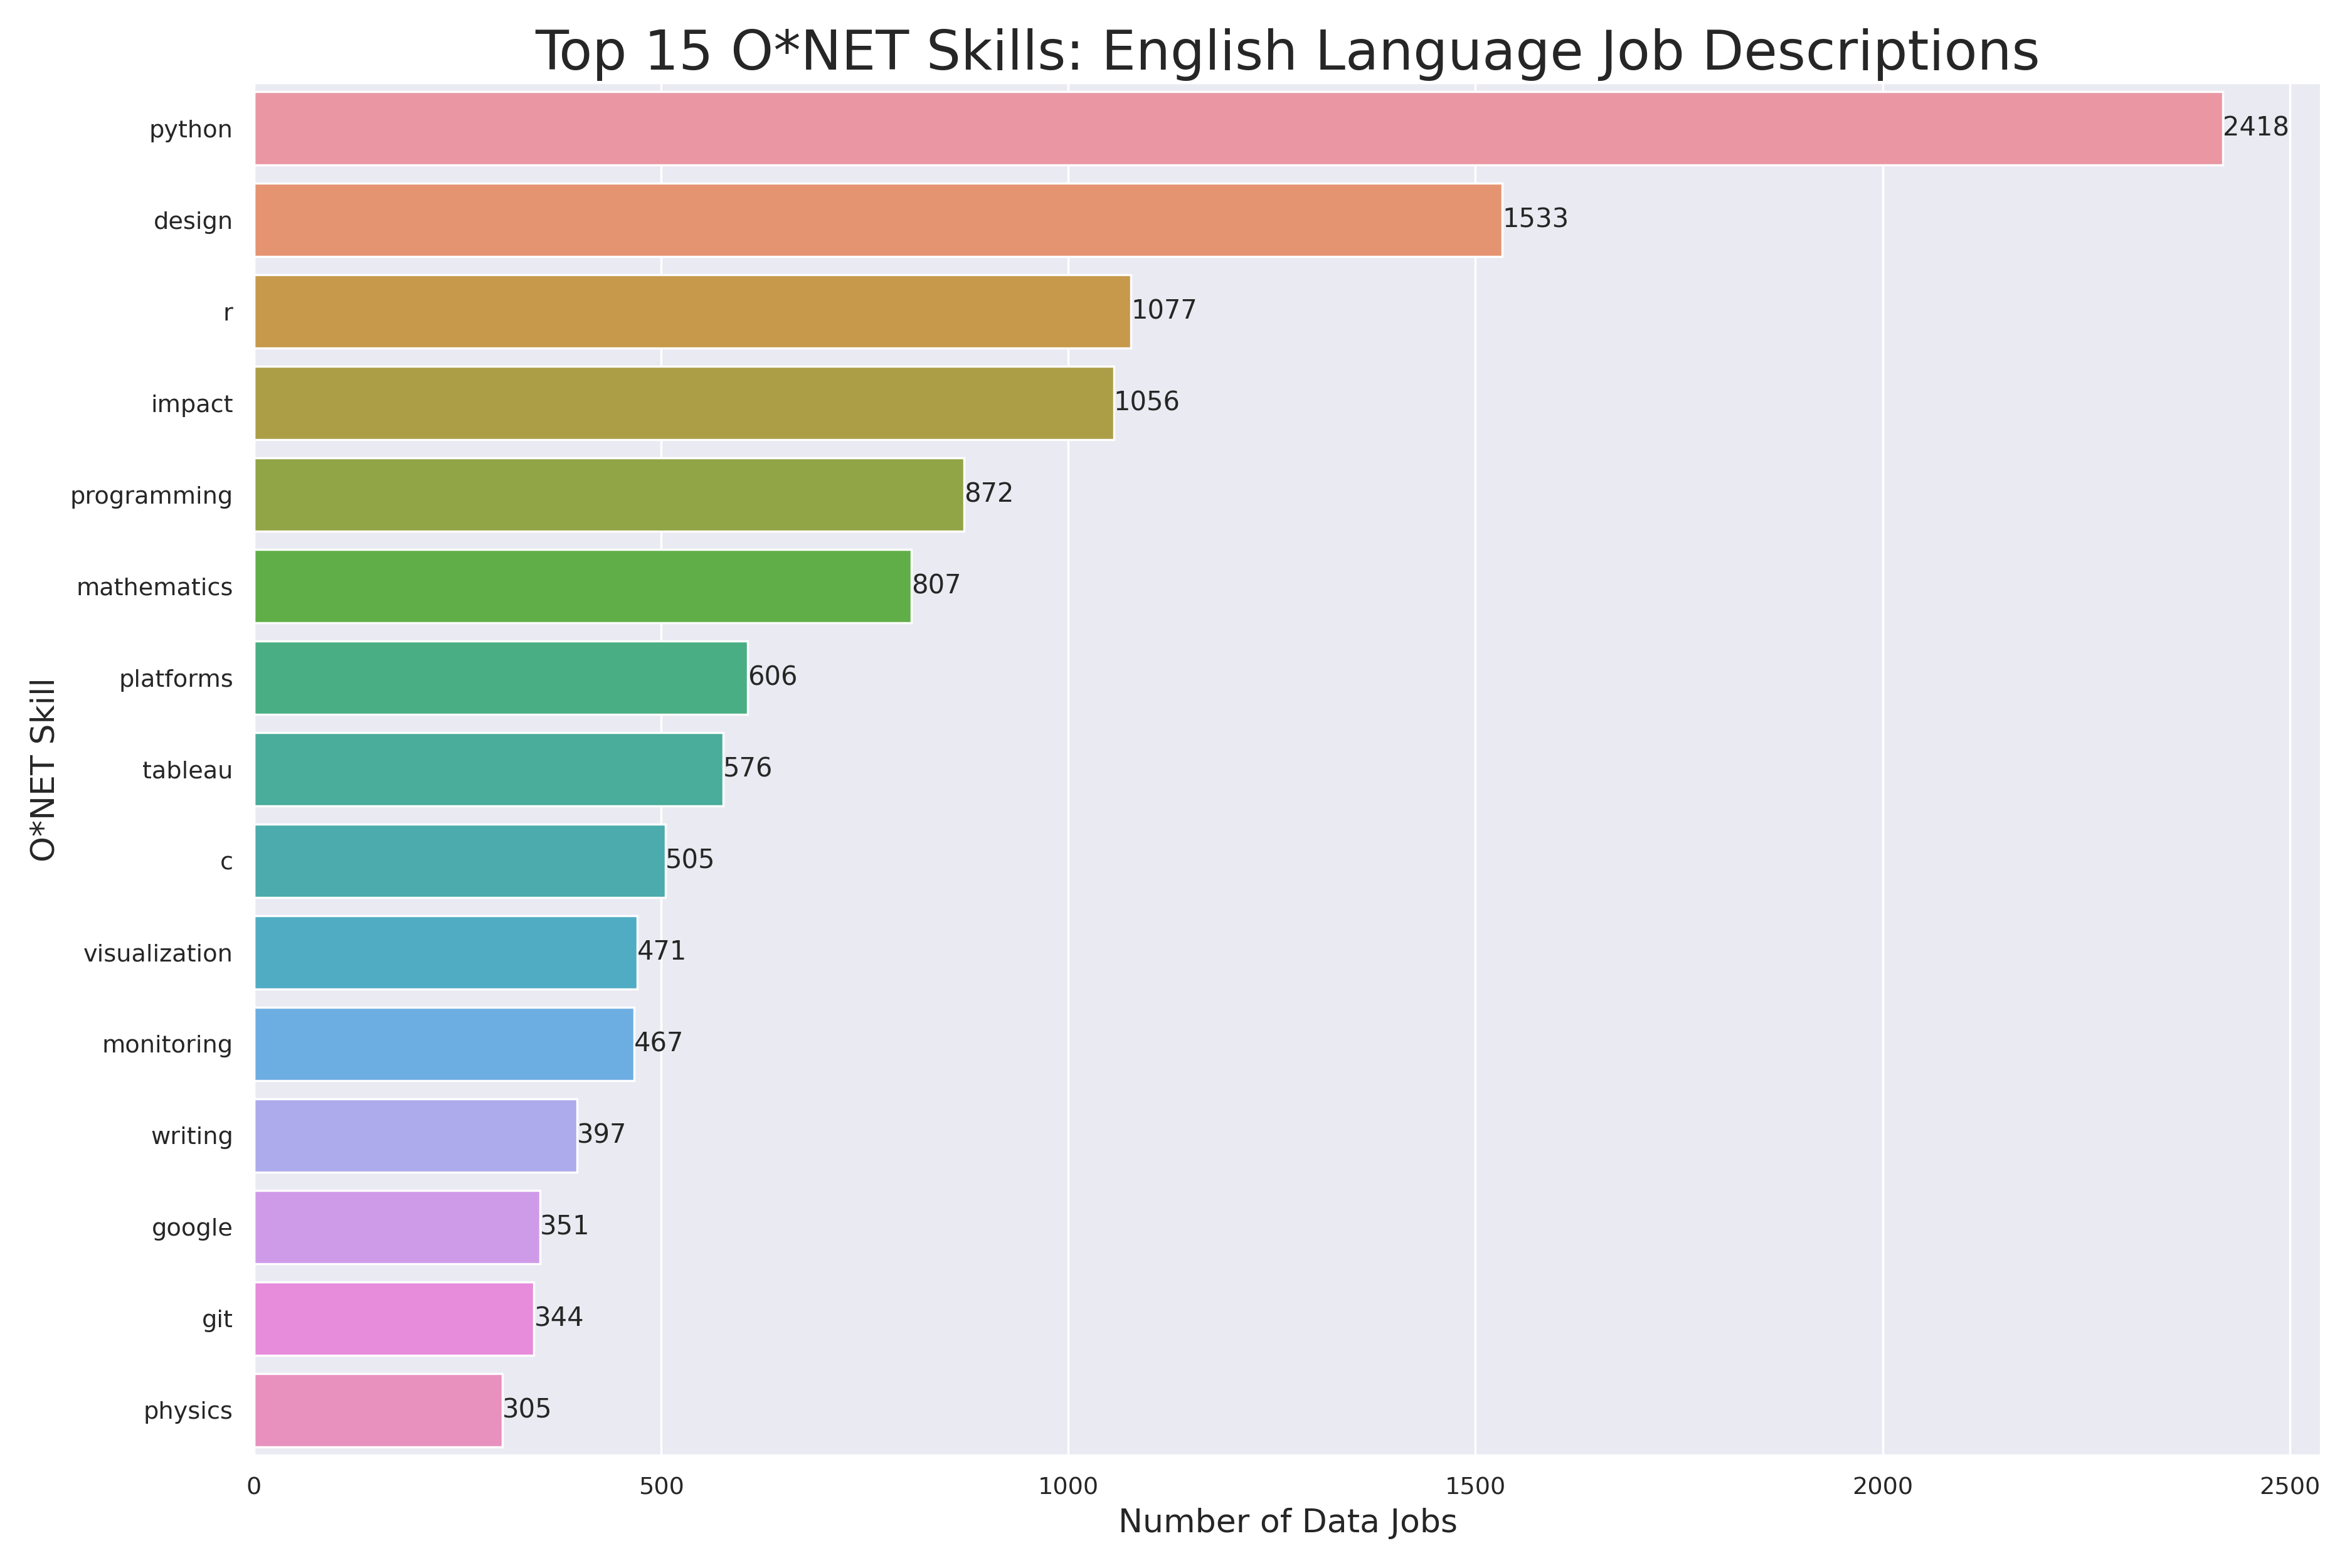 Most common ONET skills